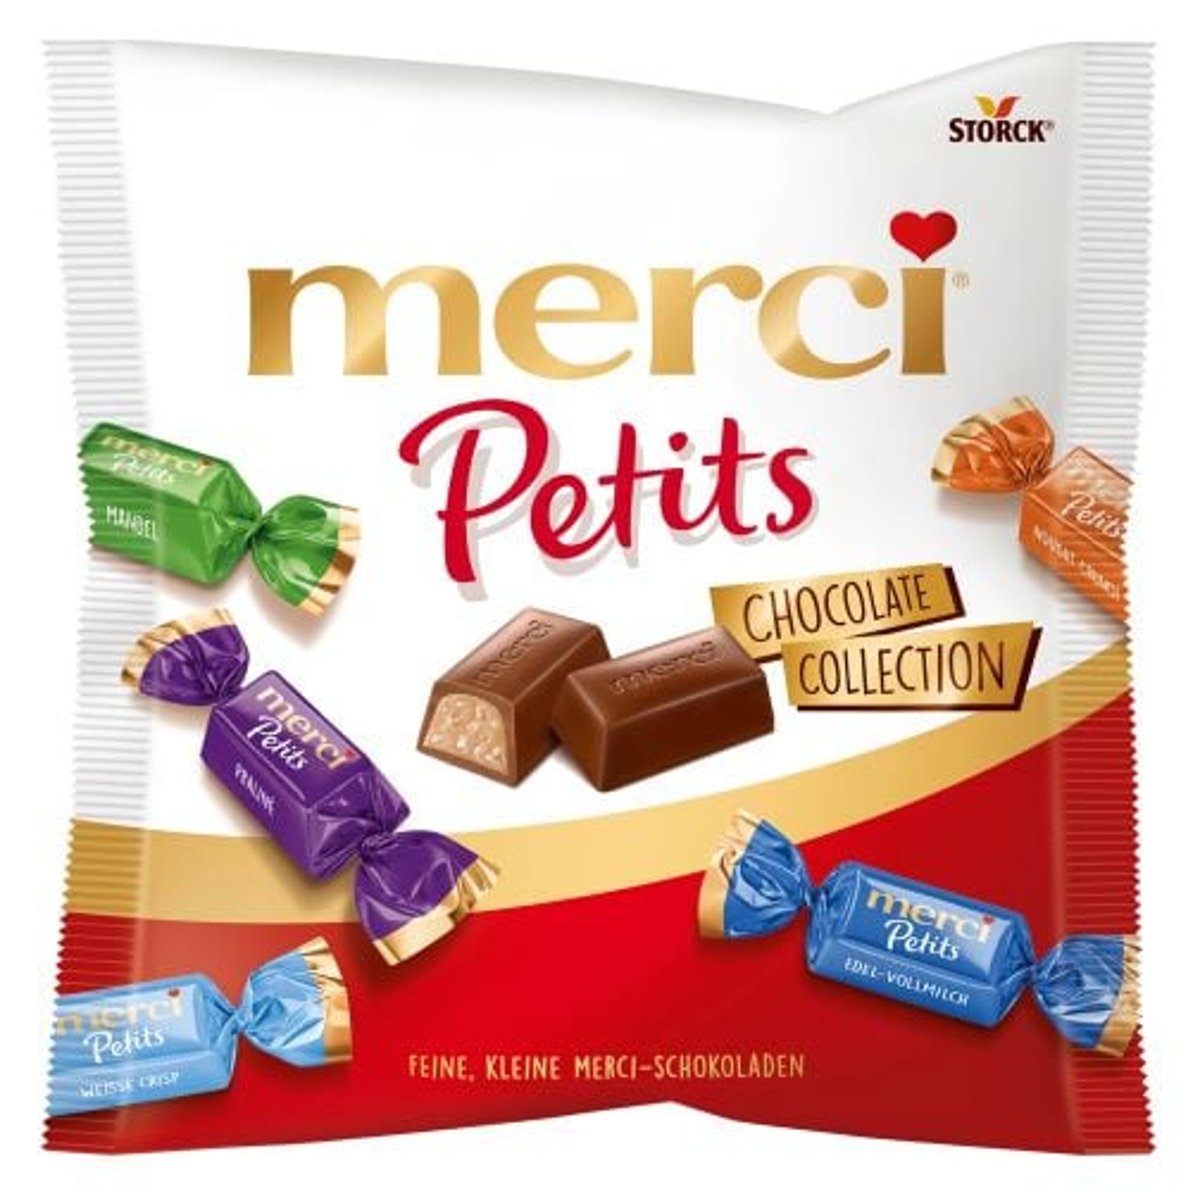 Merci Petits Chocolate collection